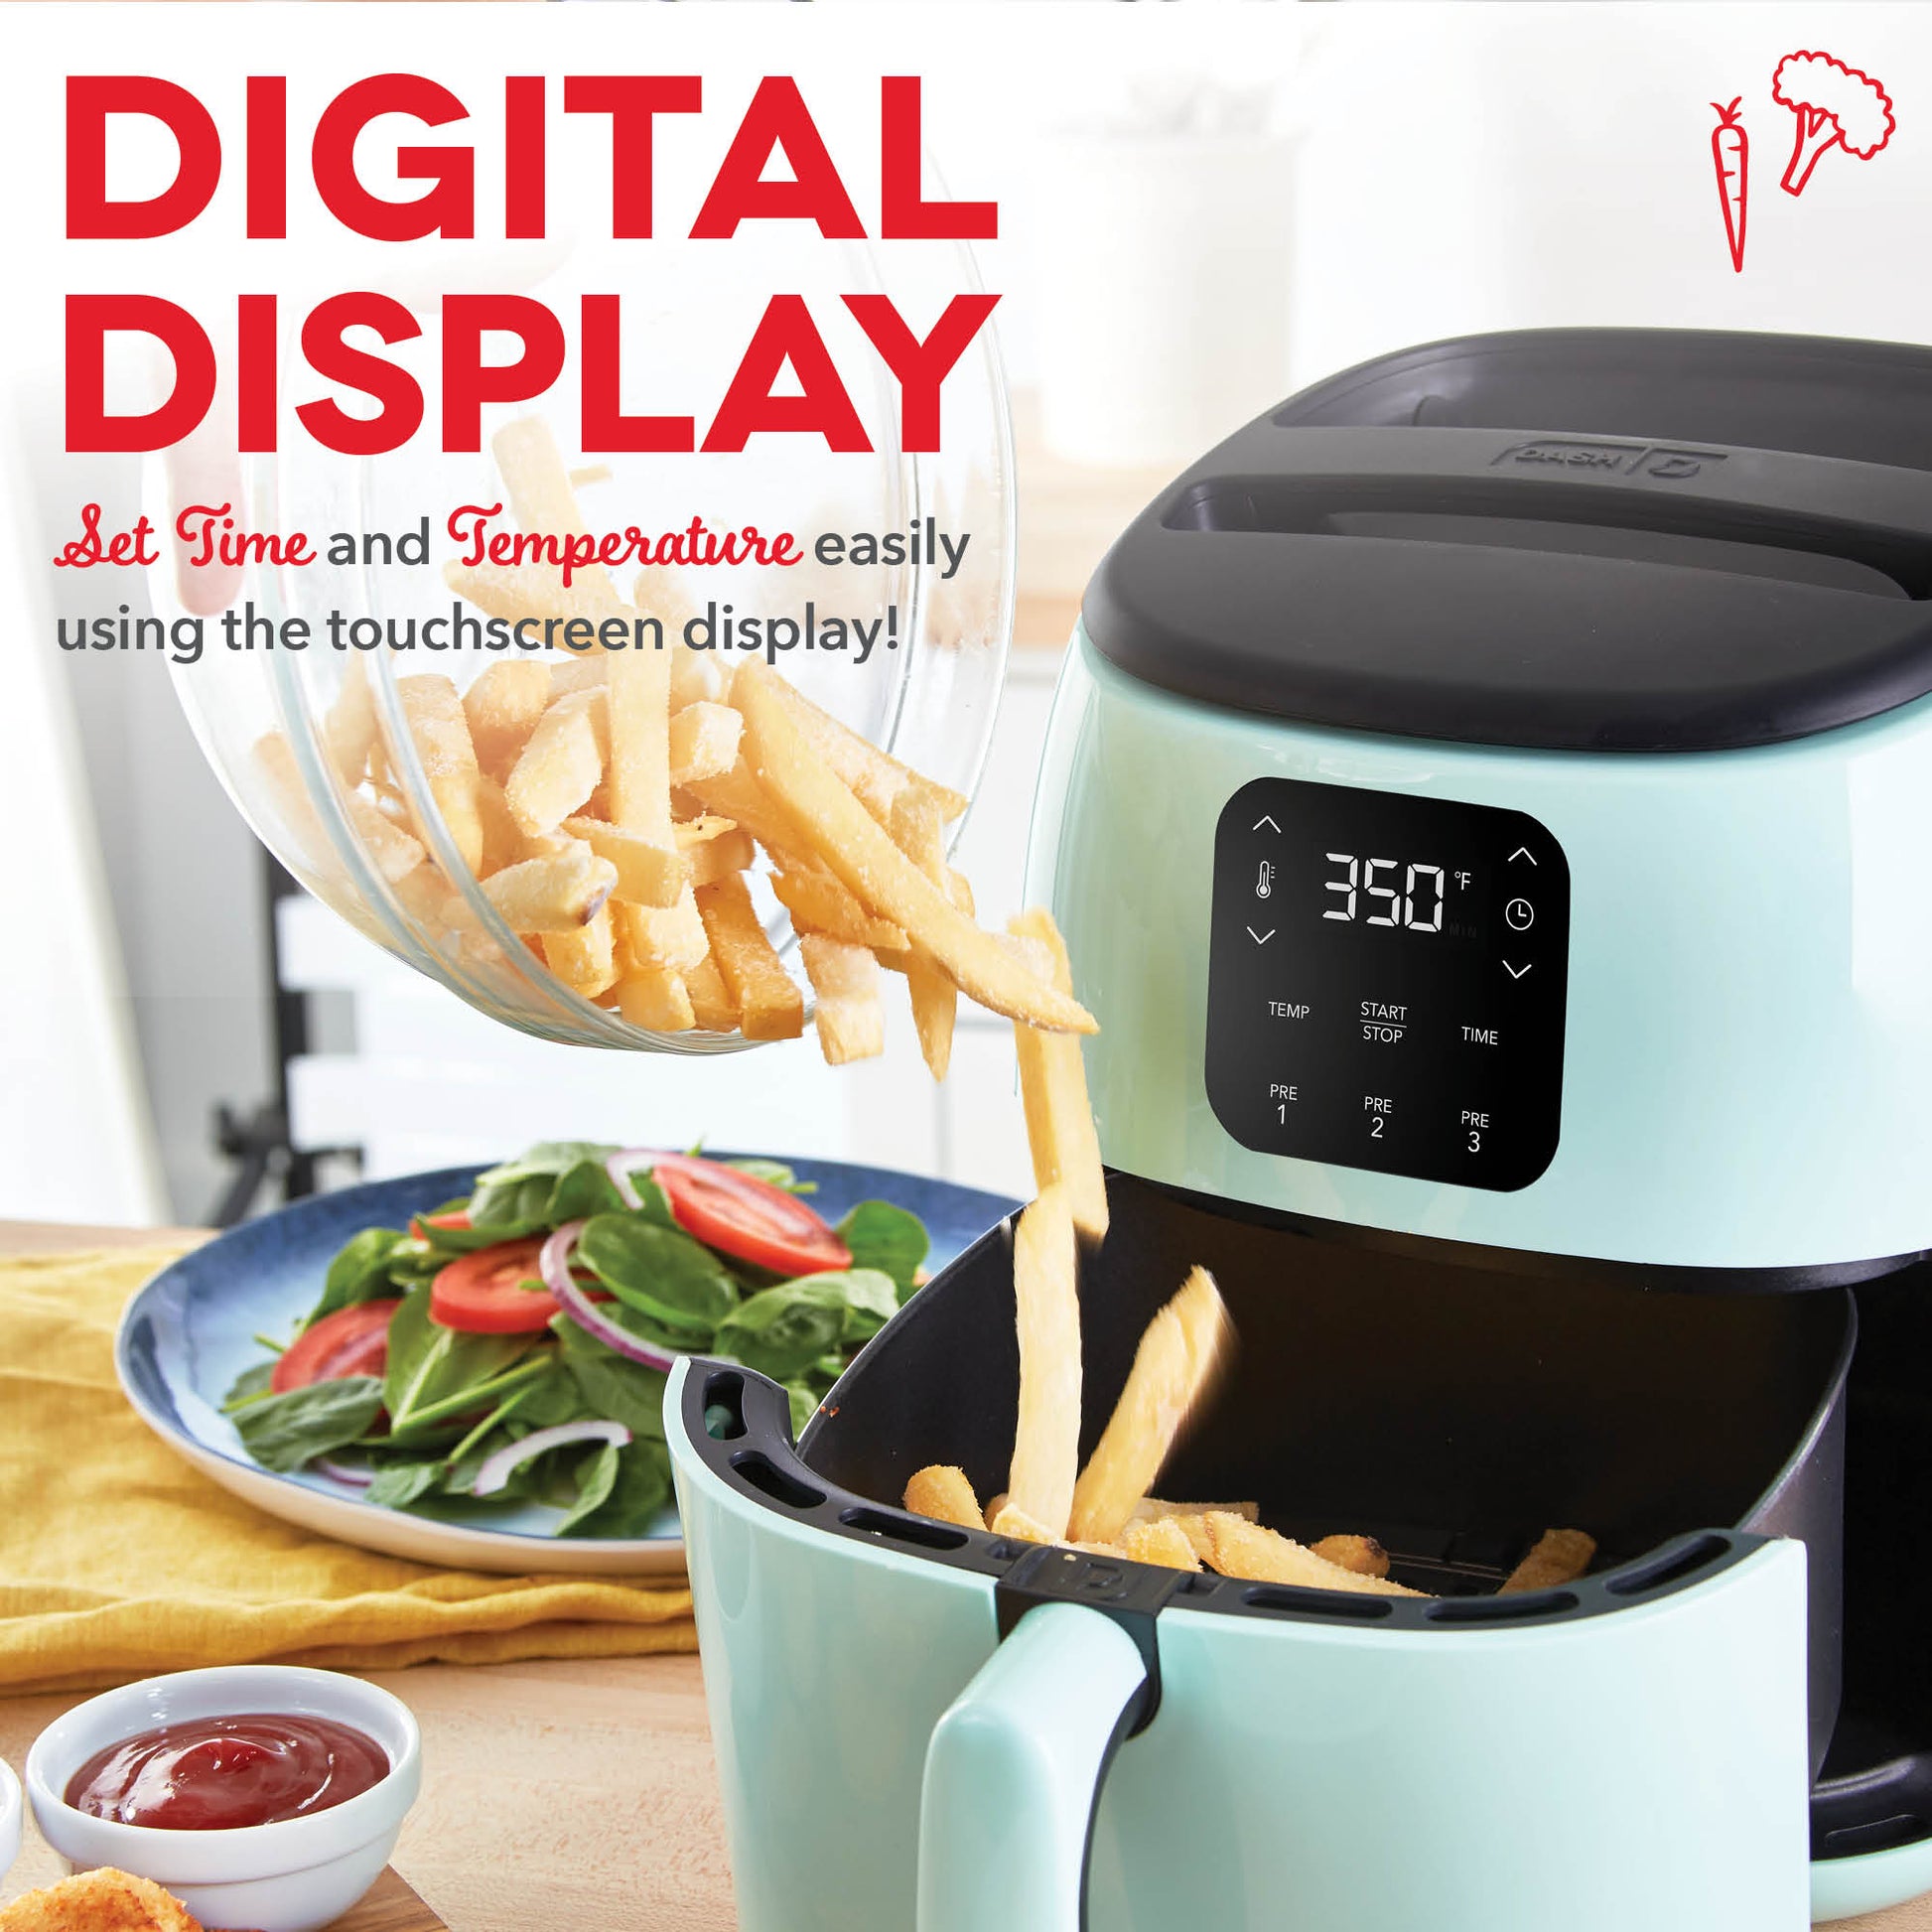 Dash Digital Tasti-Crisp 2.6qt Air Fryer review